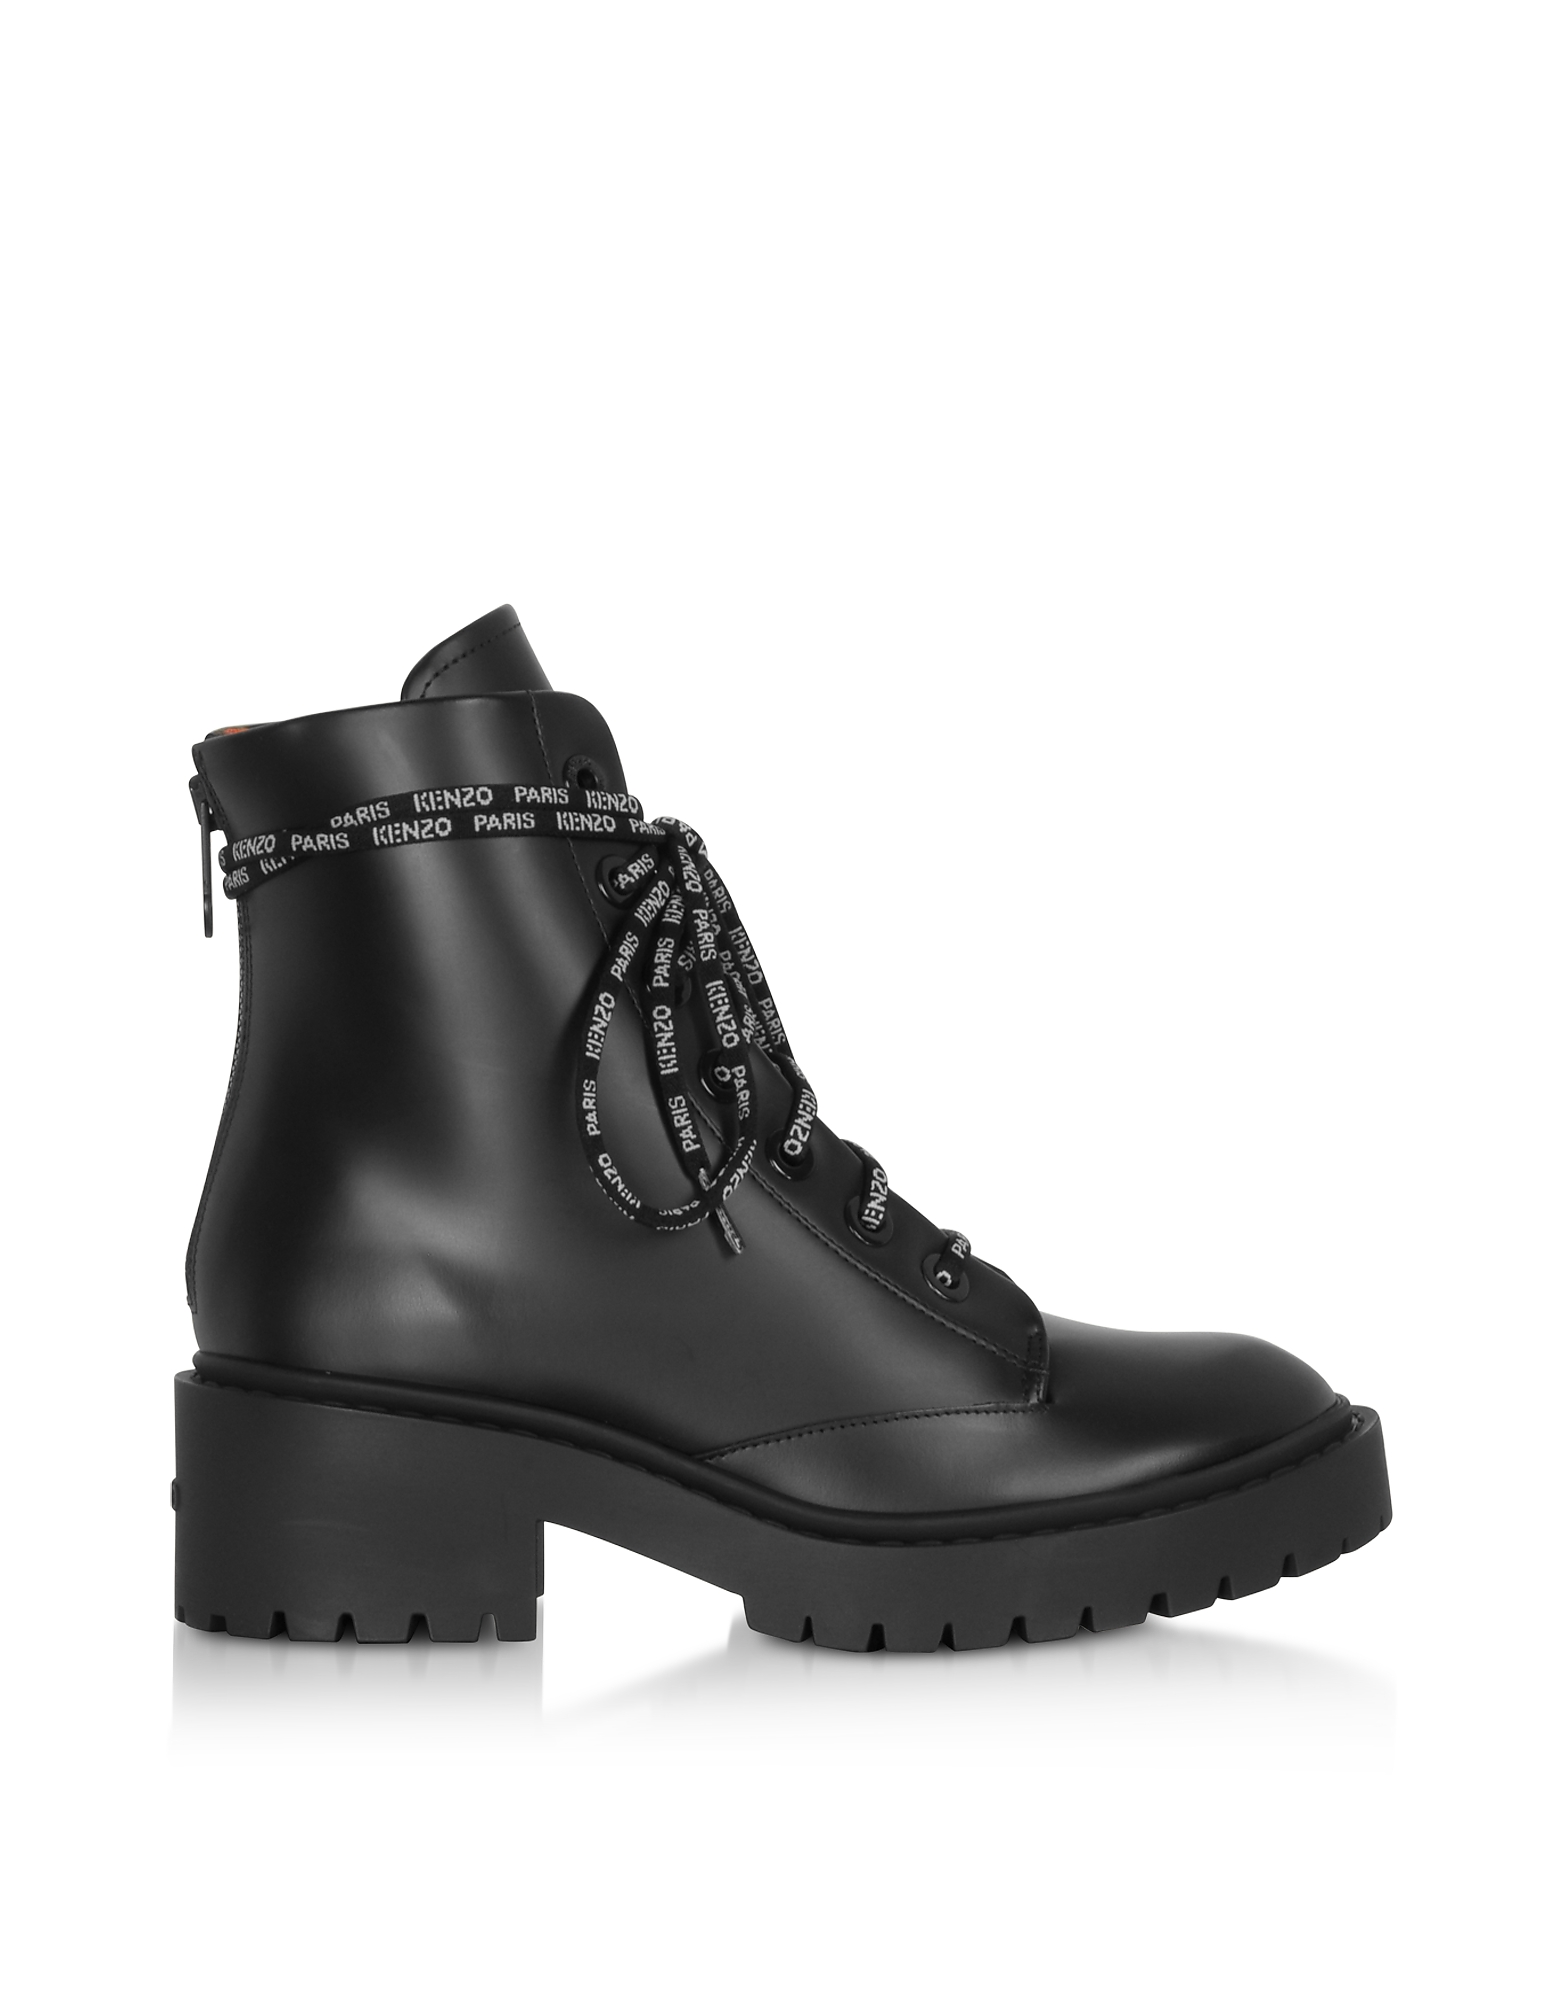 

Kenzo Black Leather Women's Combat Boots